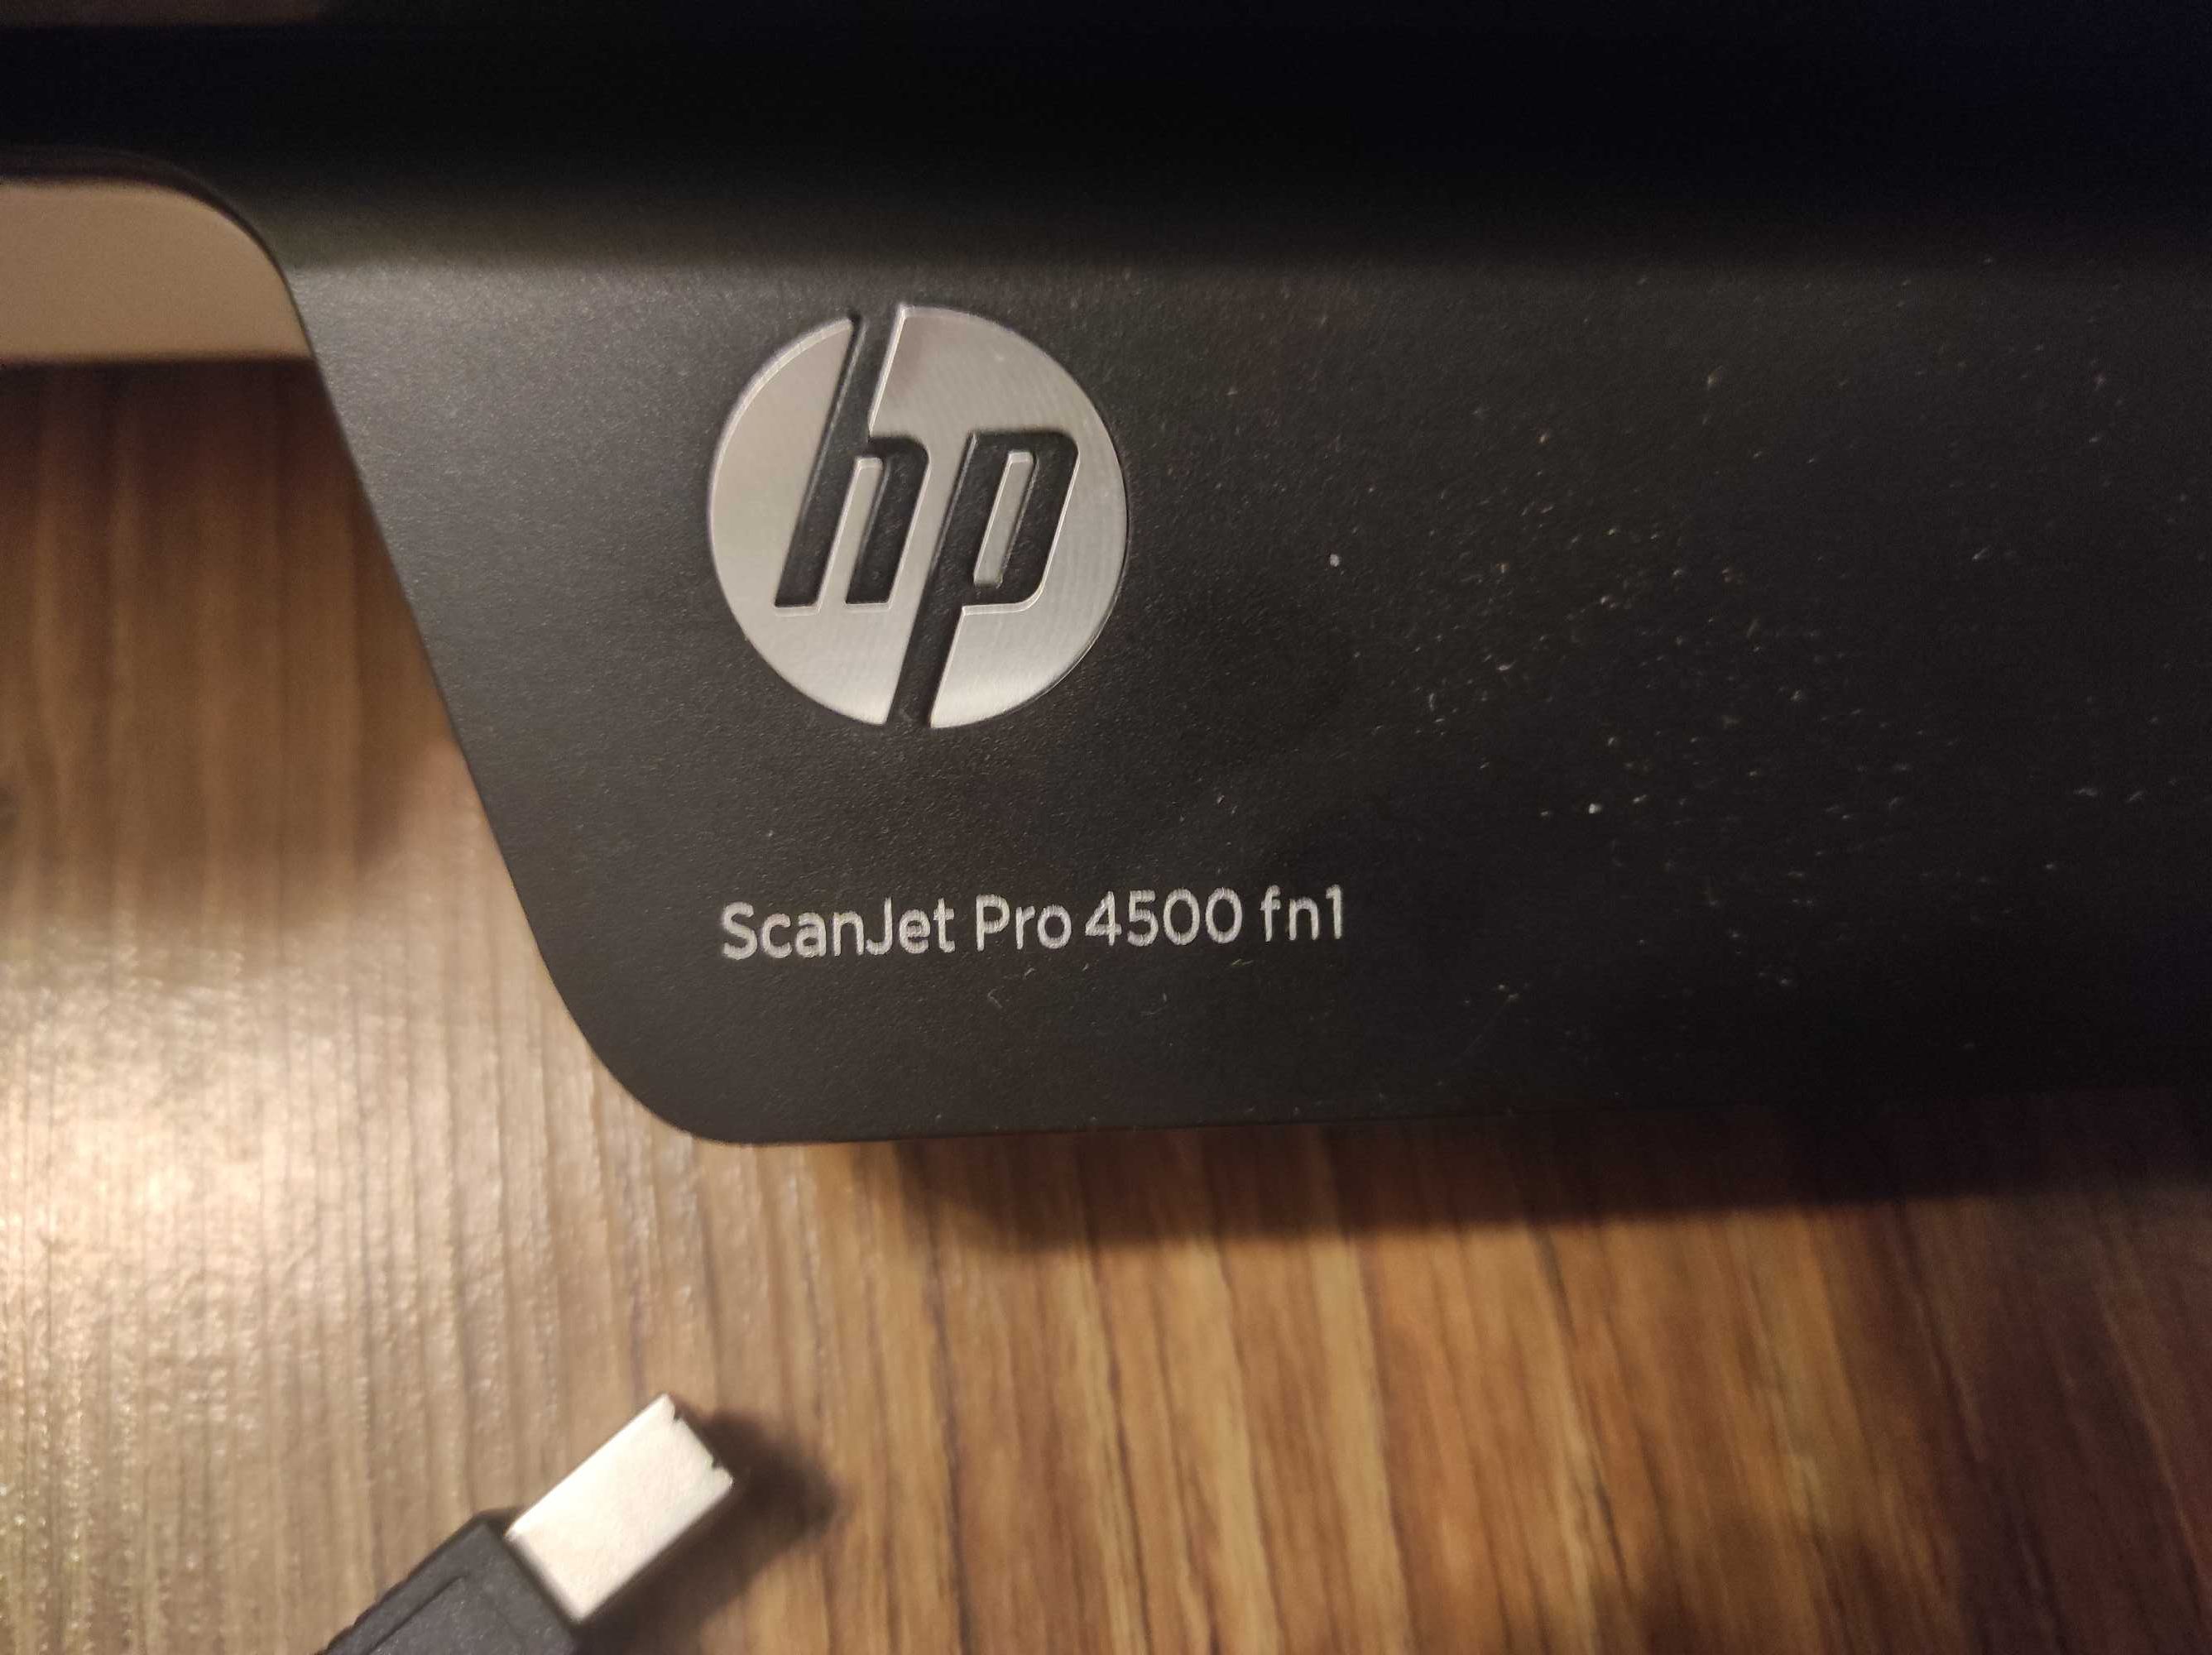 Skaner HP ScanJet Pro 4500 fn1